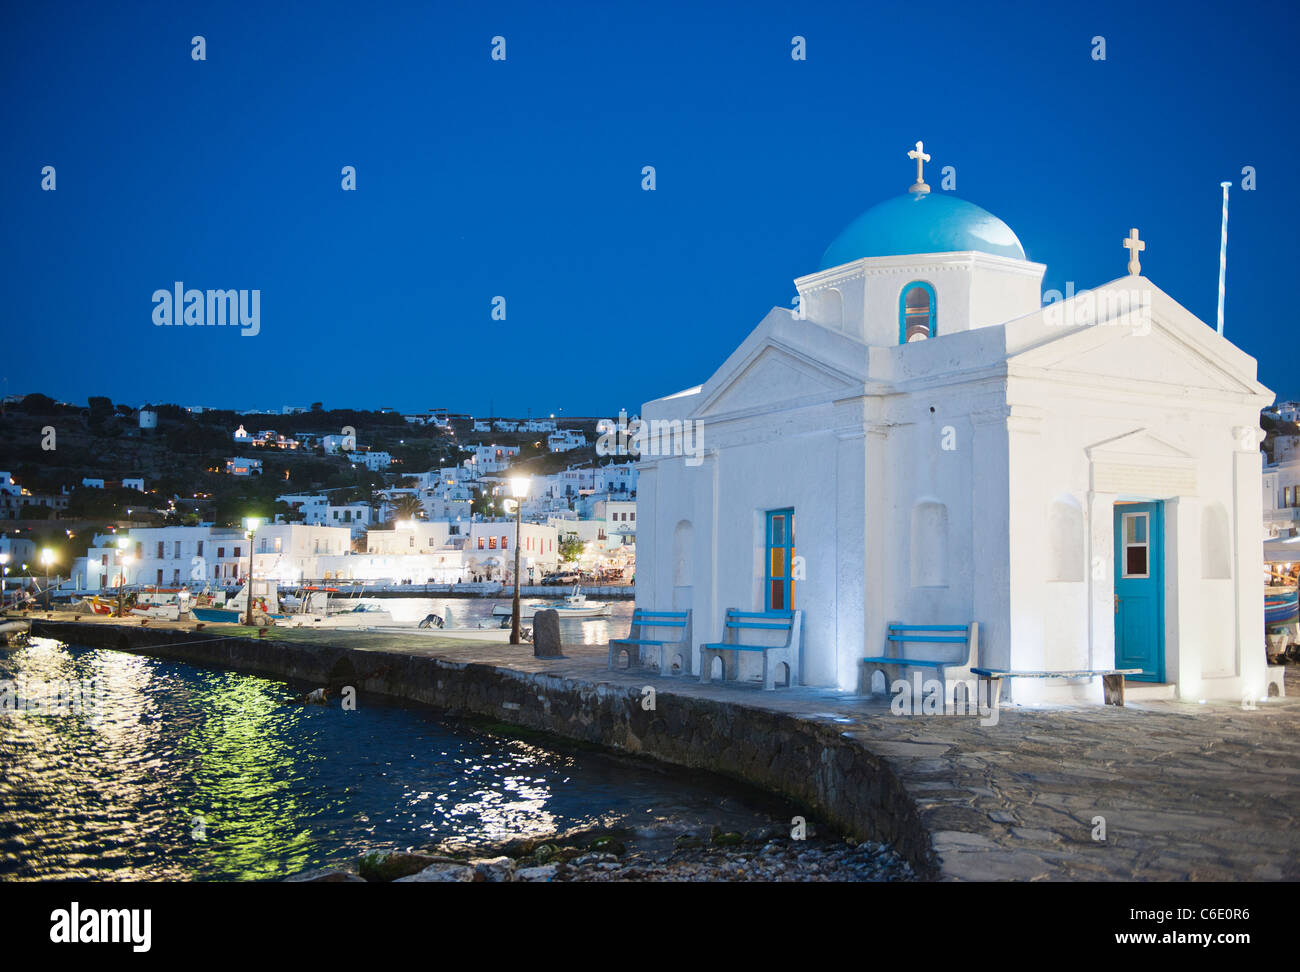 Greece, Cyclades Islands, Mykonos, Church in harbor Stock Photo